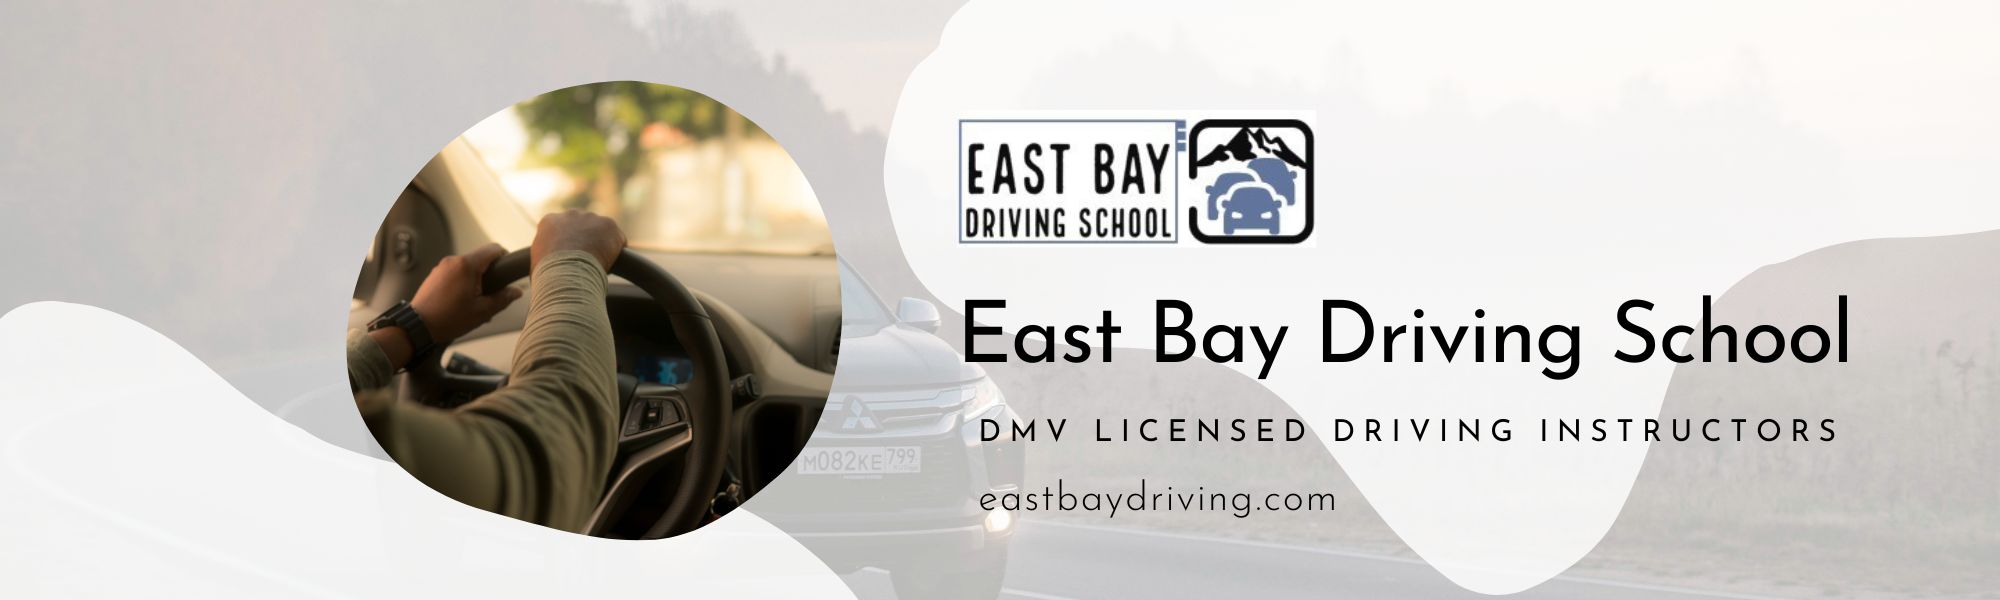 Driving School East Bay